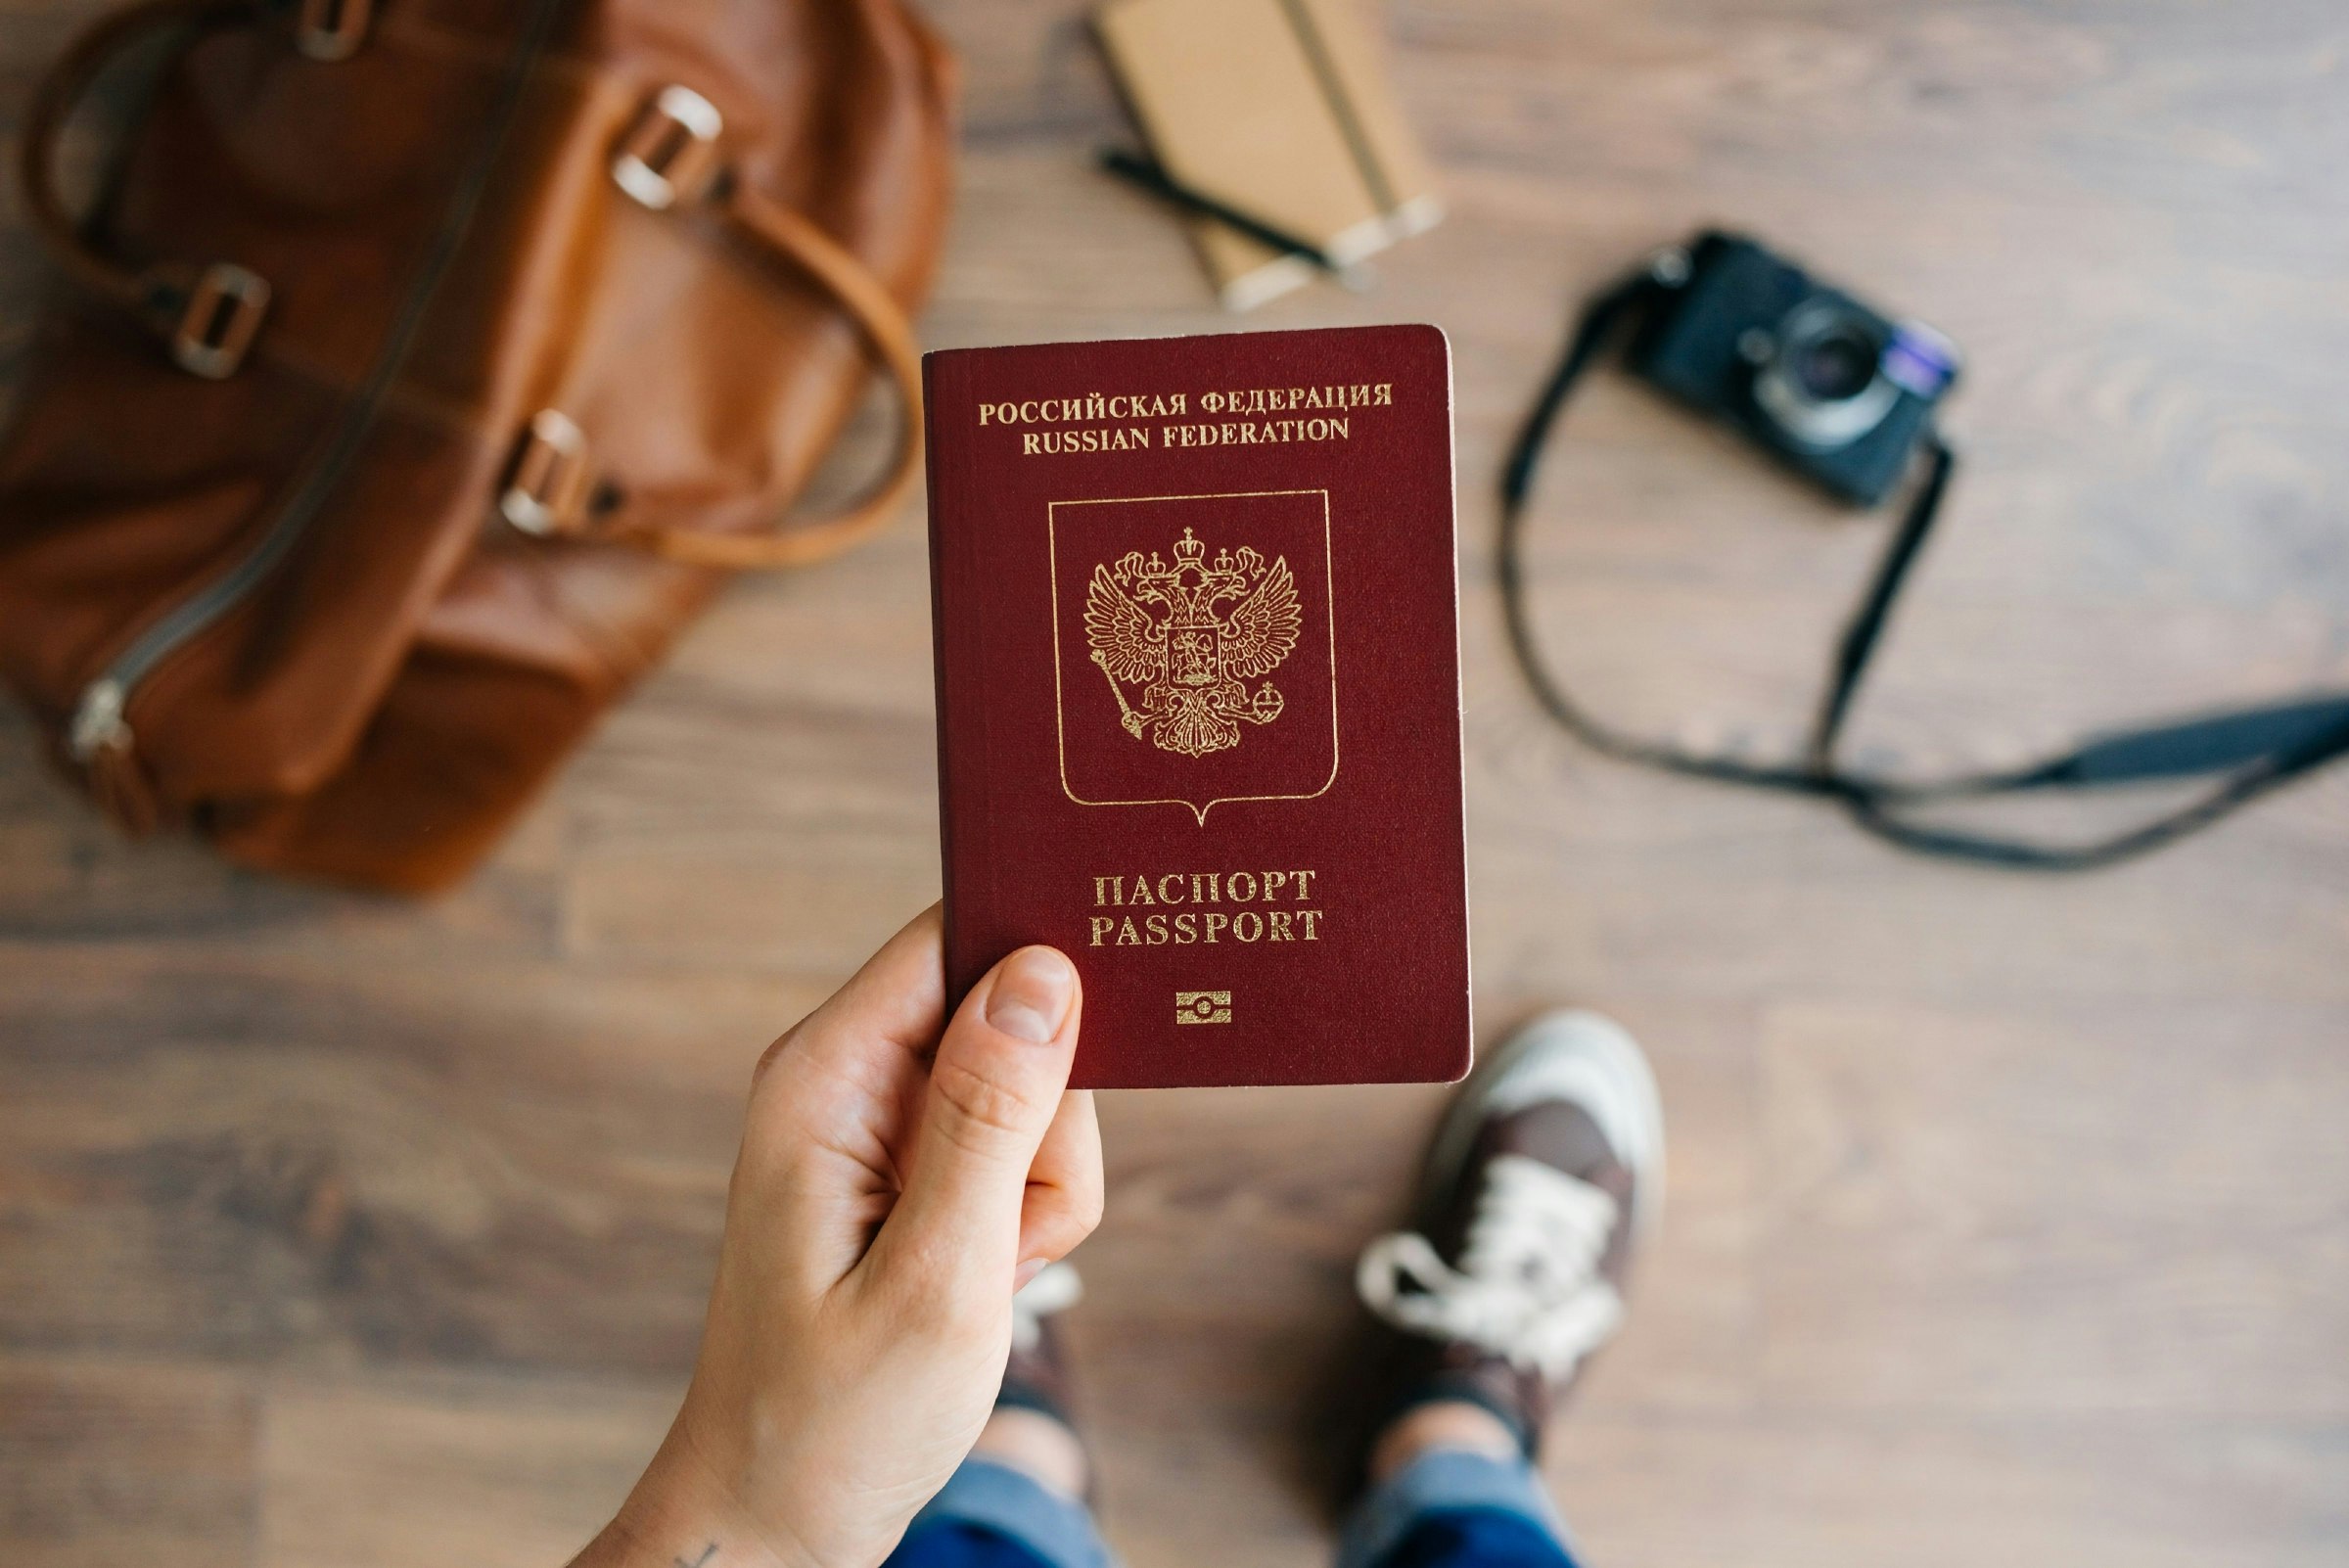 A hand holding a red Russian passport